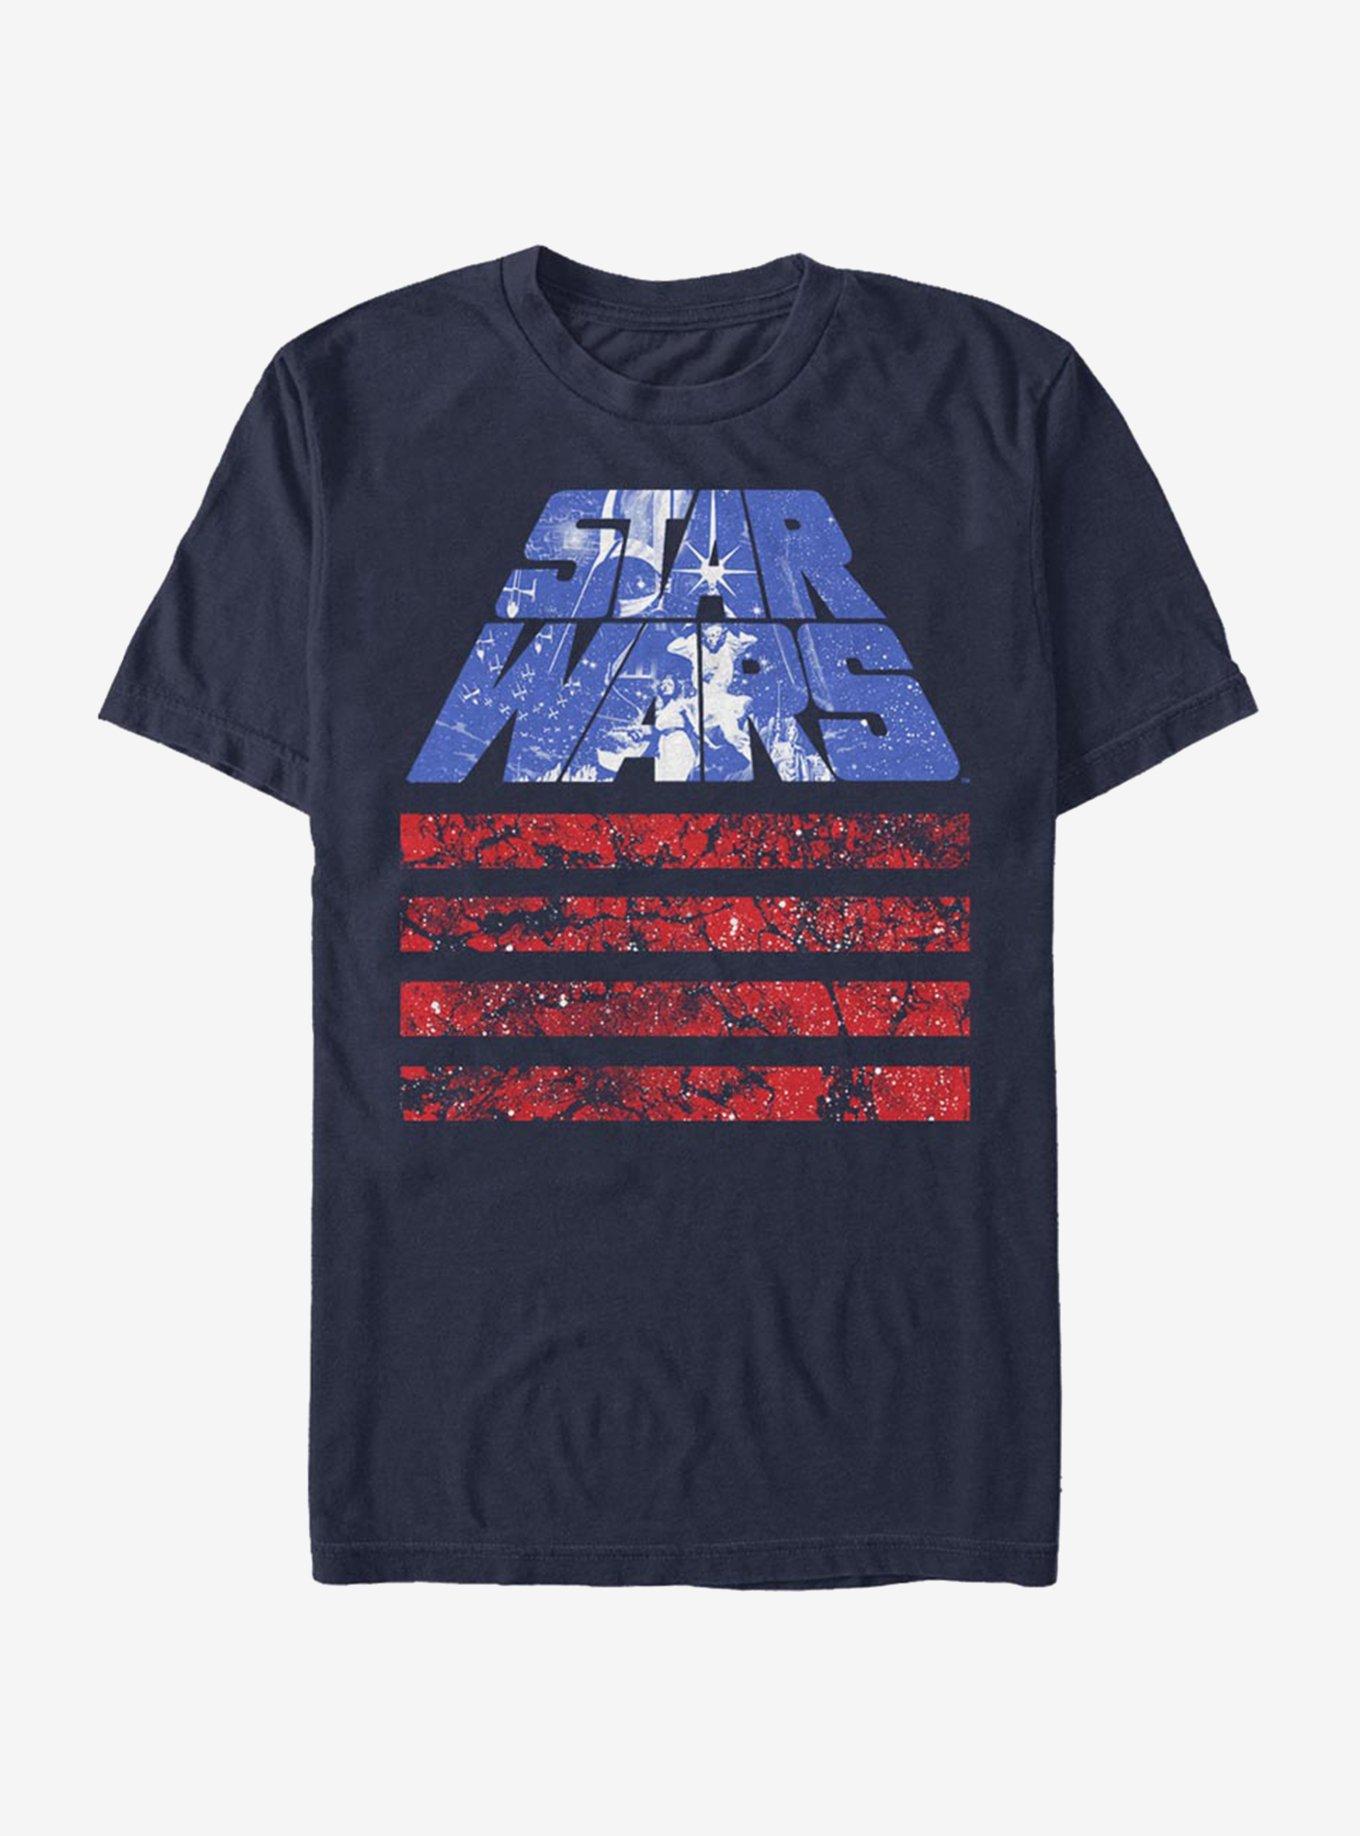 Star Wars Star Glory T-Shirt, NAVY, hi-res